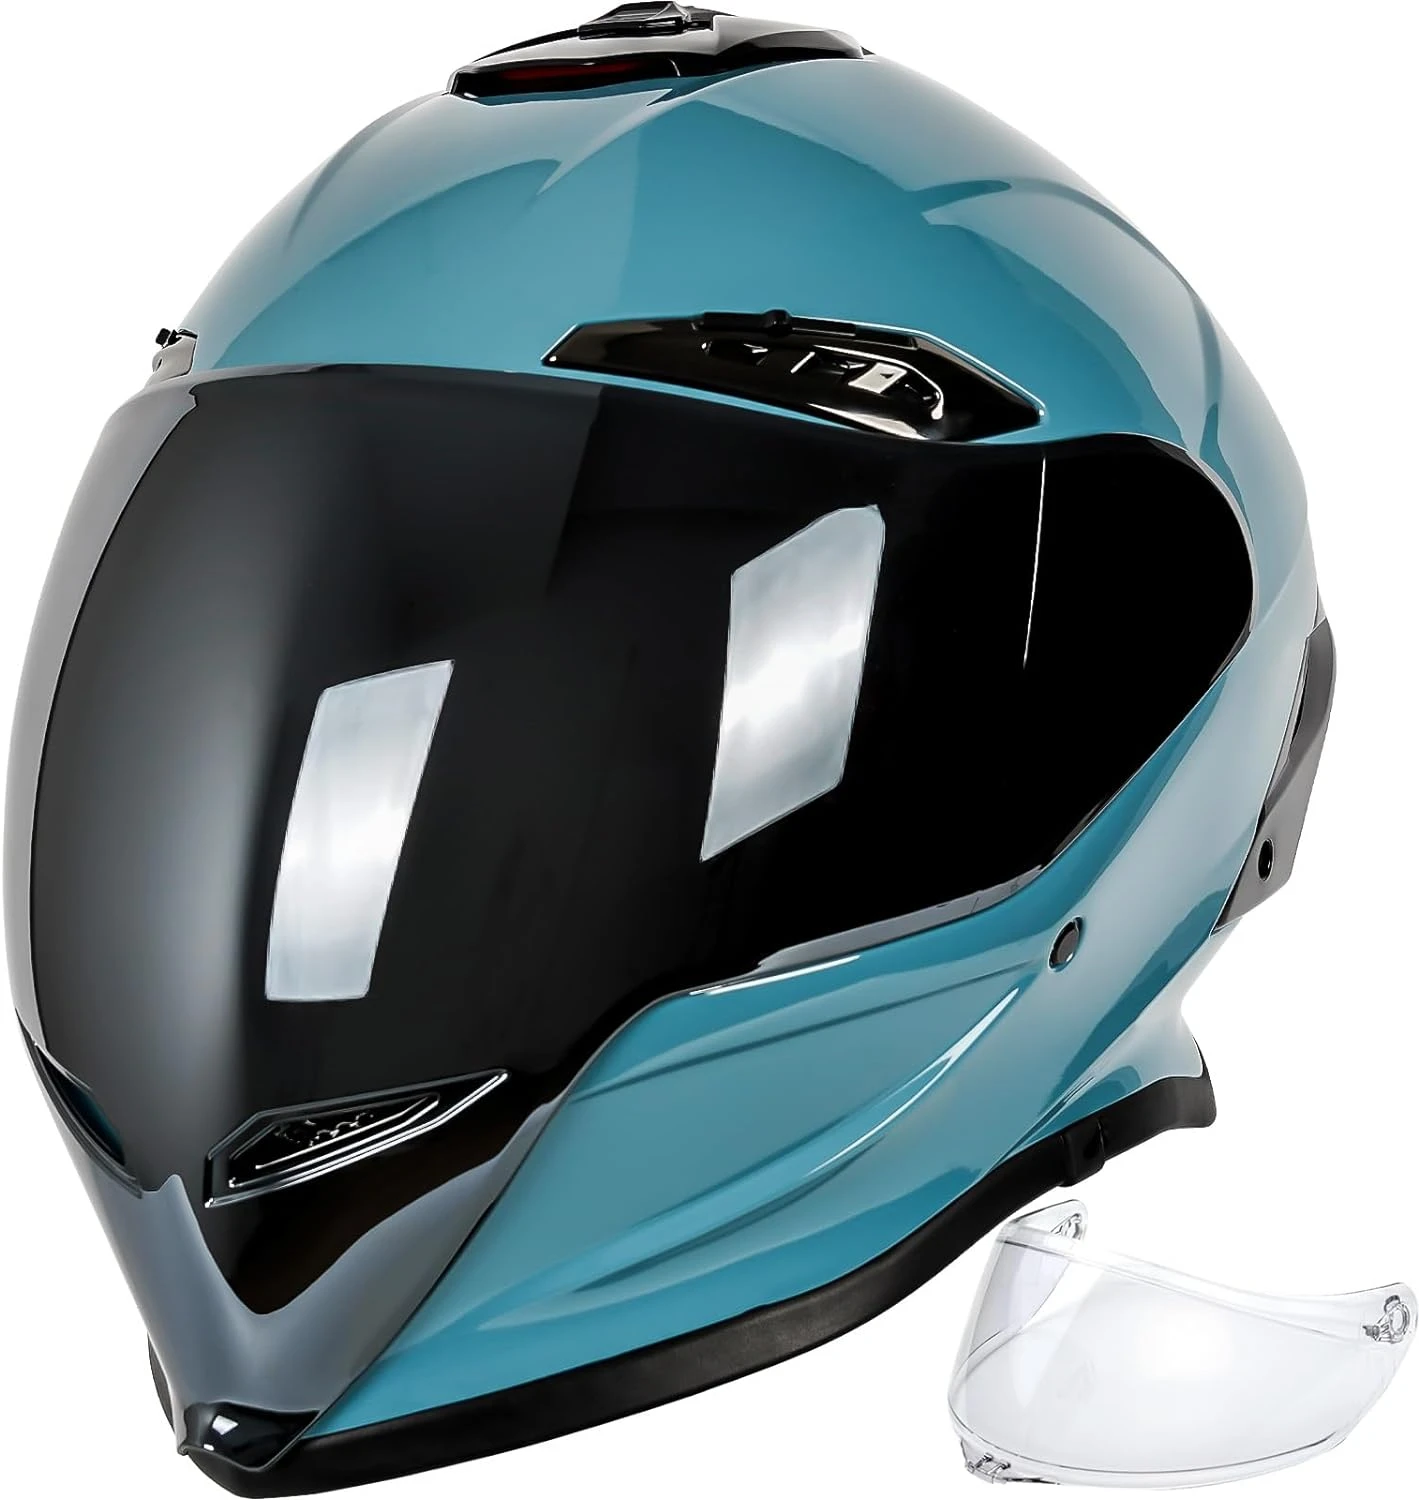 

Full Face Helmet - Street Dirt Bike ATV Off-Road Racing Motorcycle Motocross Helmet with Transparent Visor- DOT Certified